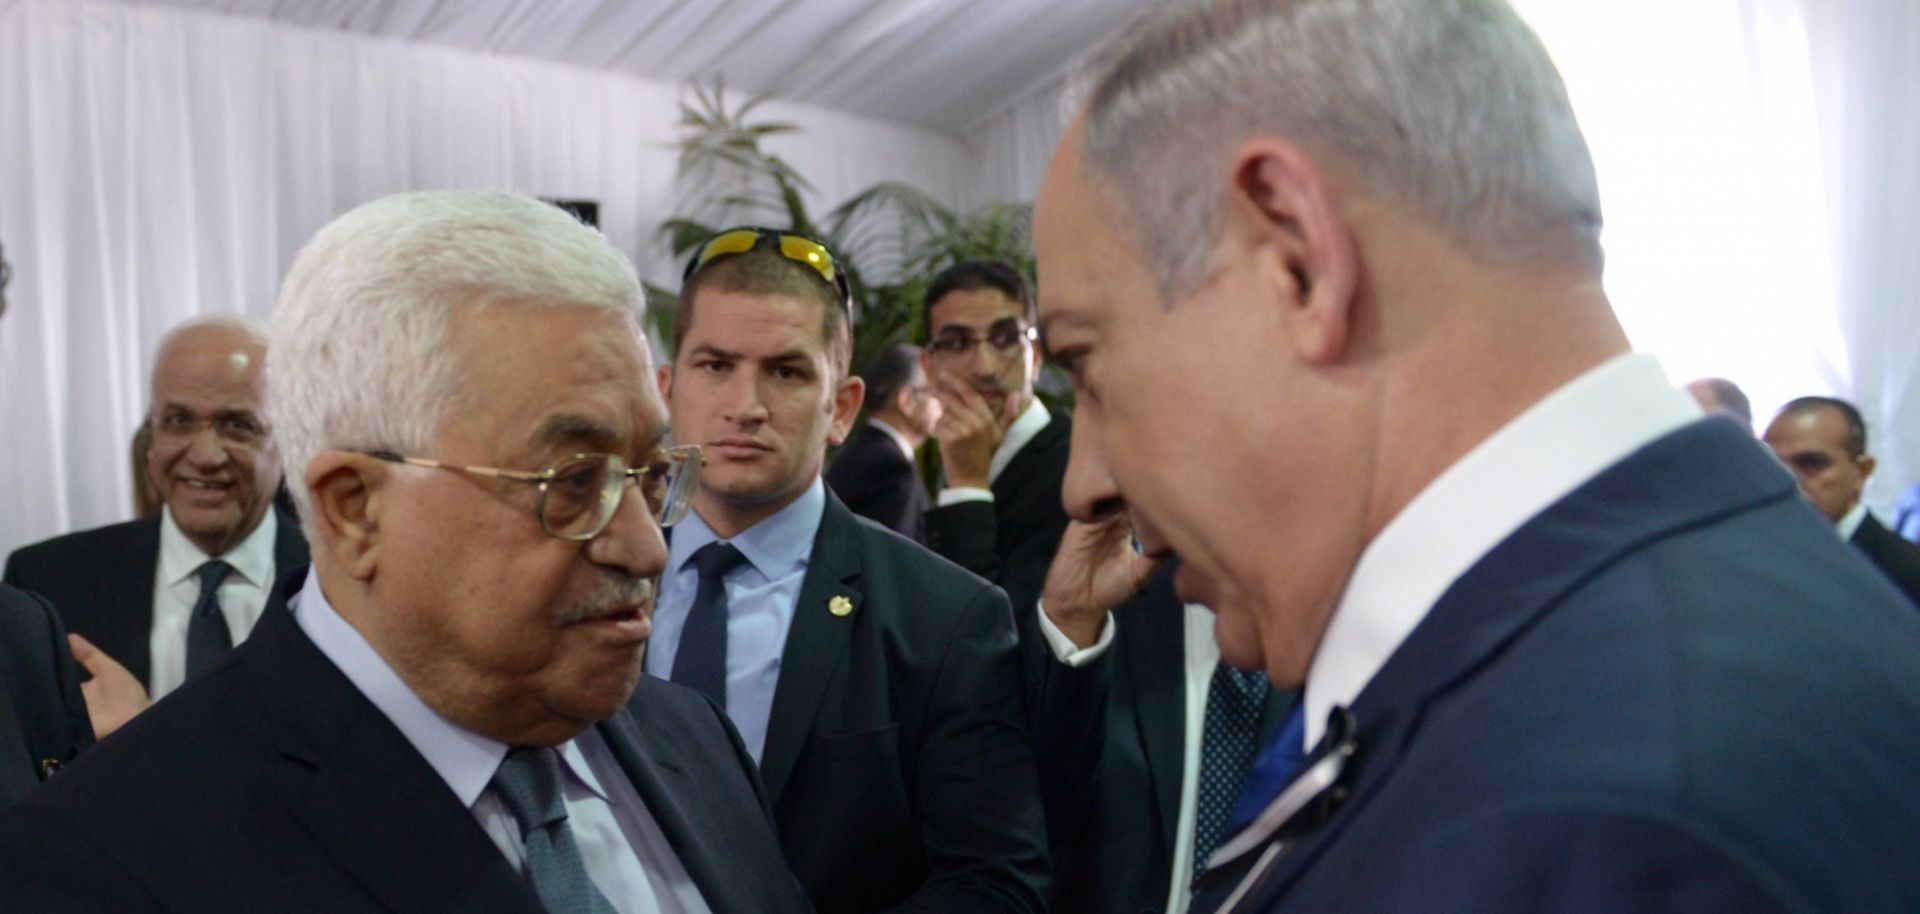 Israeli Prime Minister Benjamin Netanyahu shakes hands with Palestinian Authority President Mahmoud Abbas.